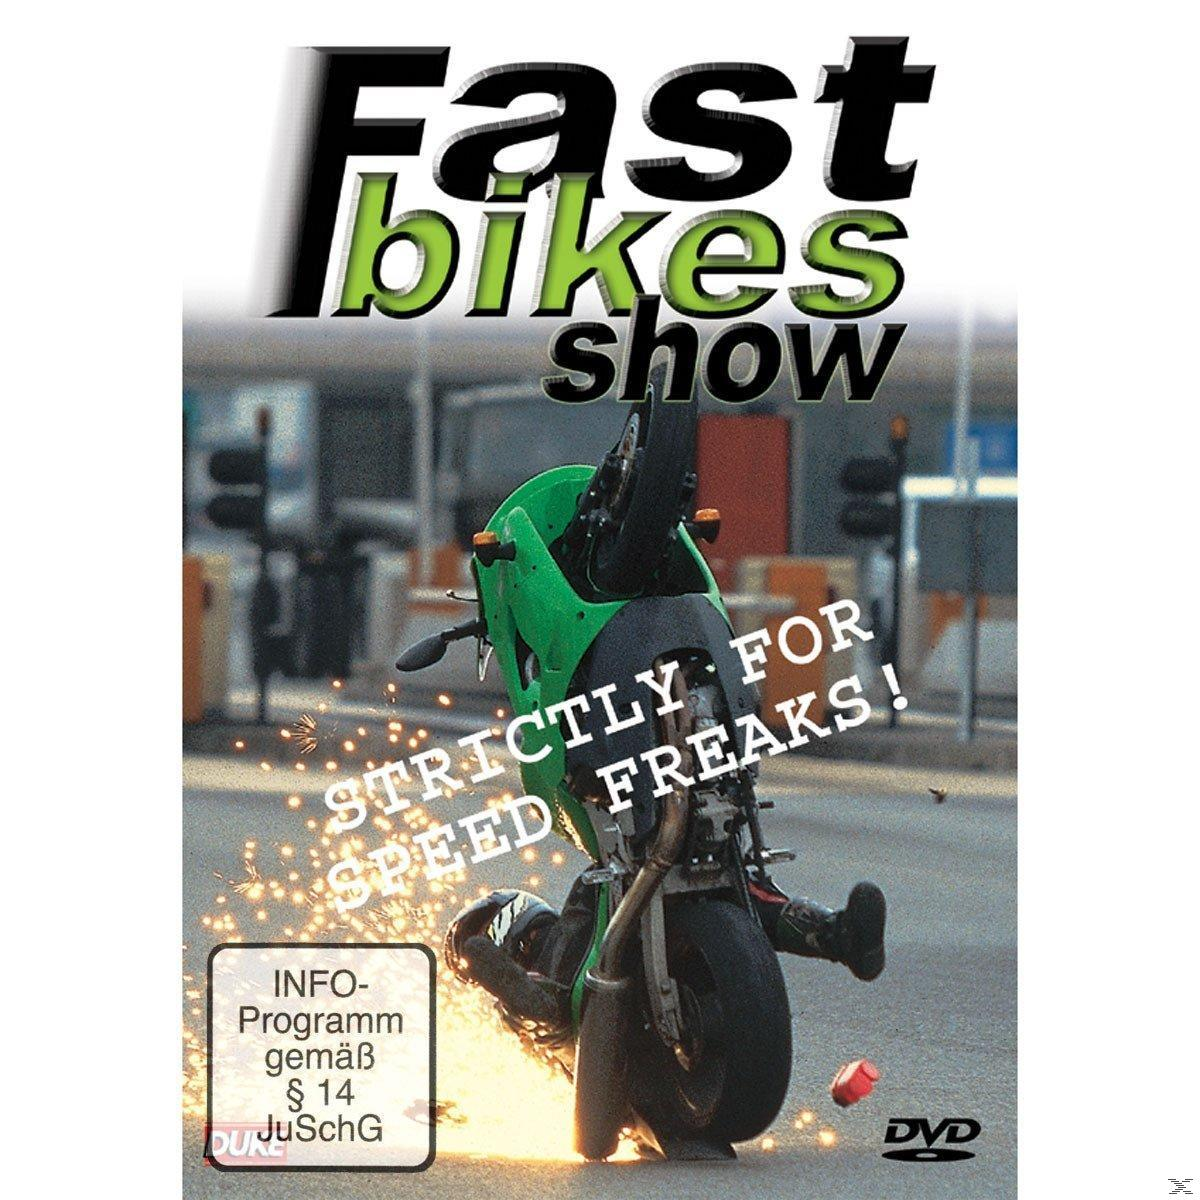 Fast 1 Bikes DVD Show